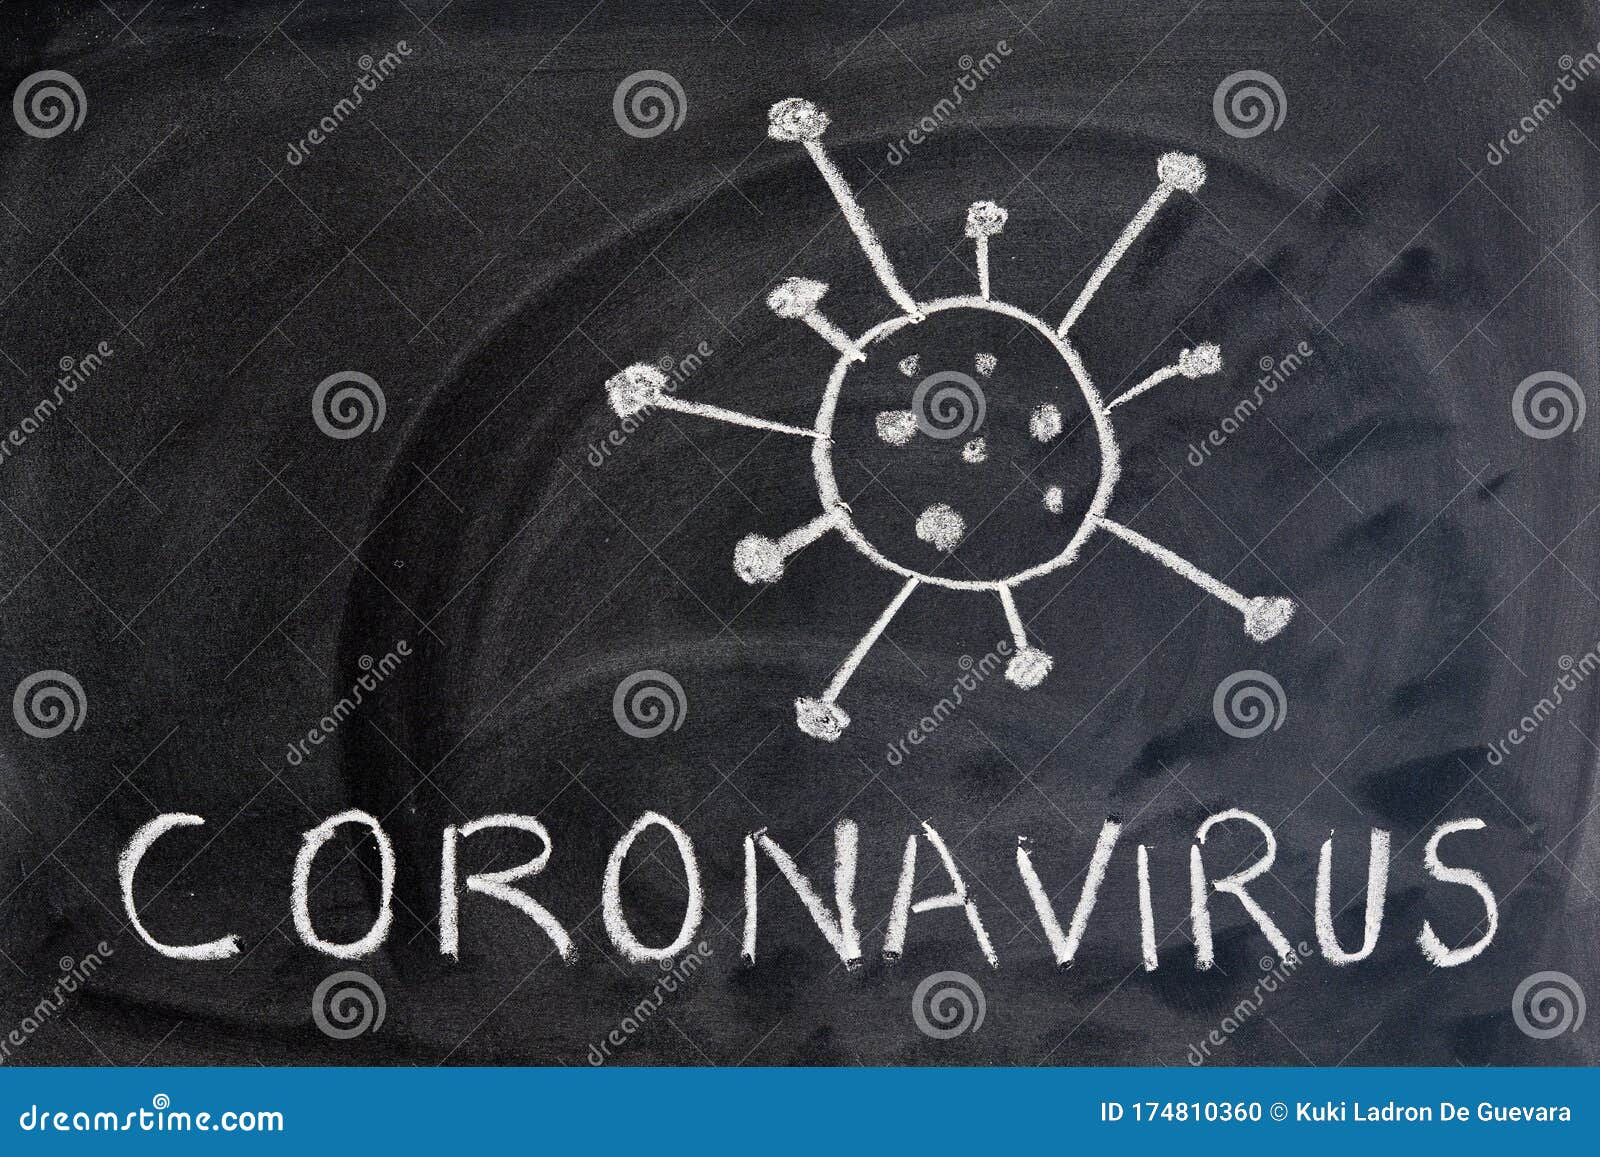 the word coronavirus written on the blackboard with a chalk